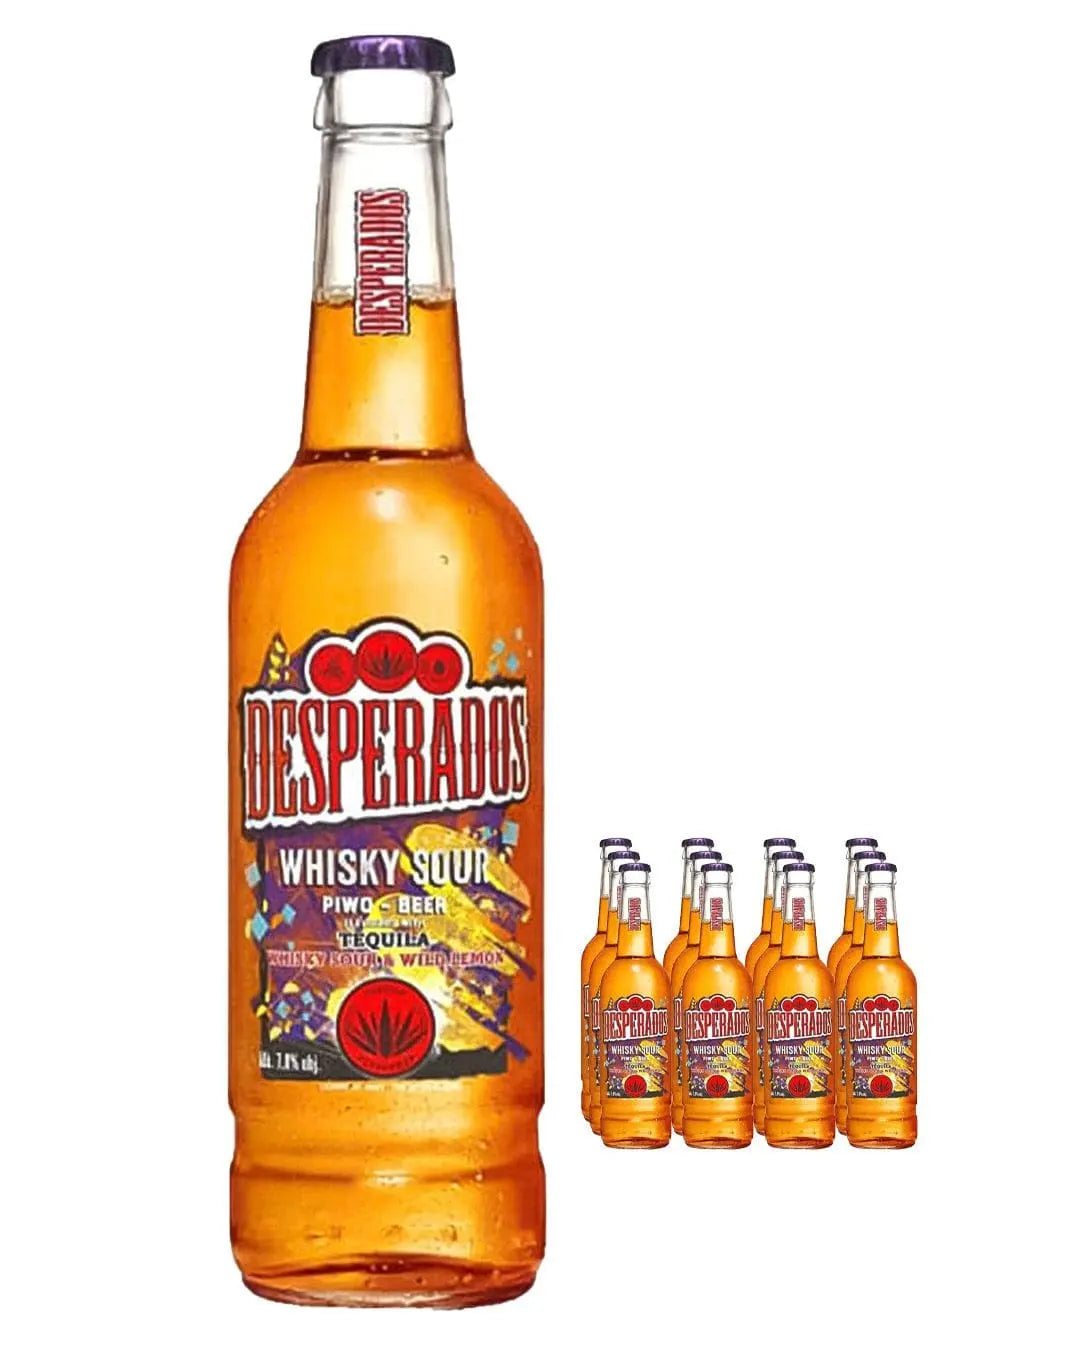 Desperados Whiskey Sour Tequila Lager Beer Bottle Multipack, 12 x 400 ml Beer